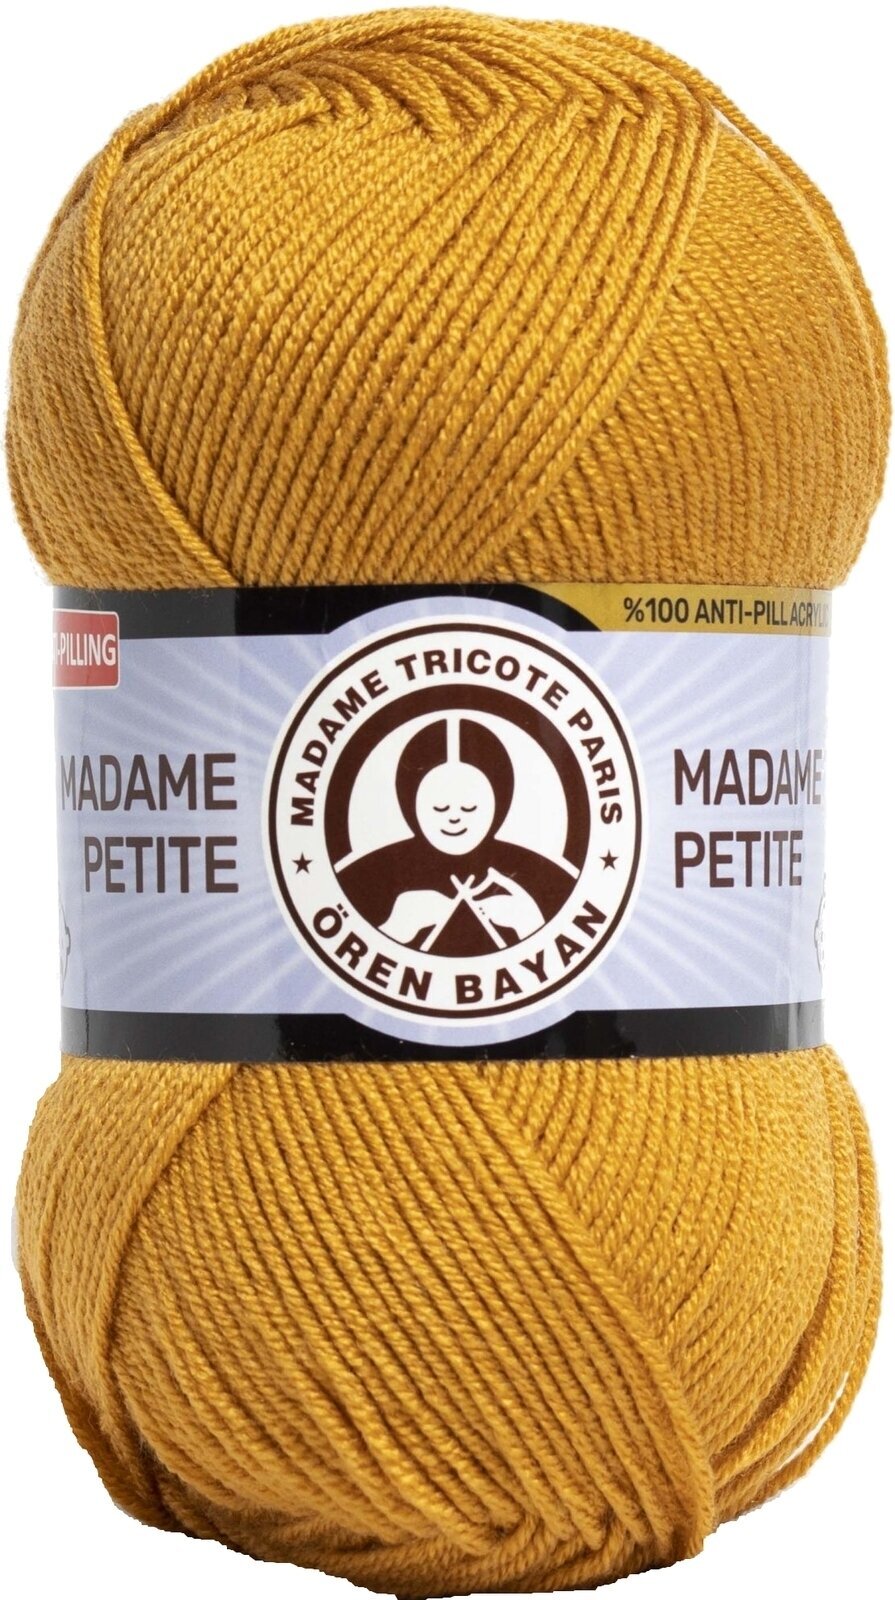 Fil à tricoter Madame Tricote Paris Madame Petite 3848 115 Fil à tricoter